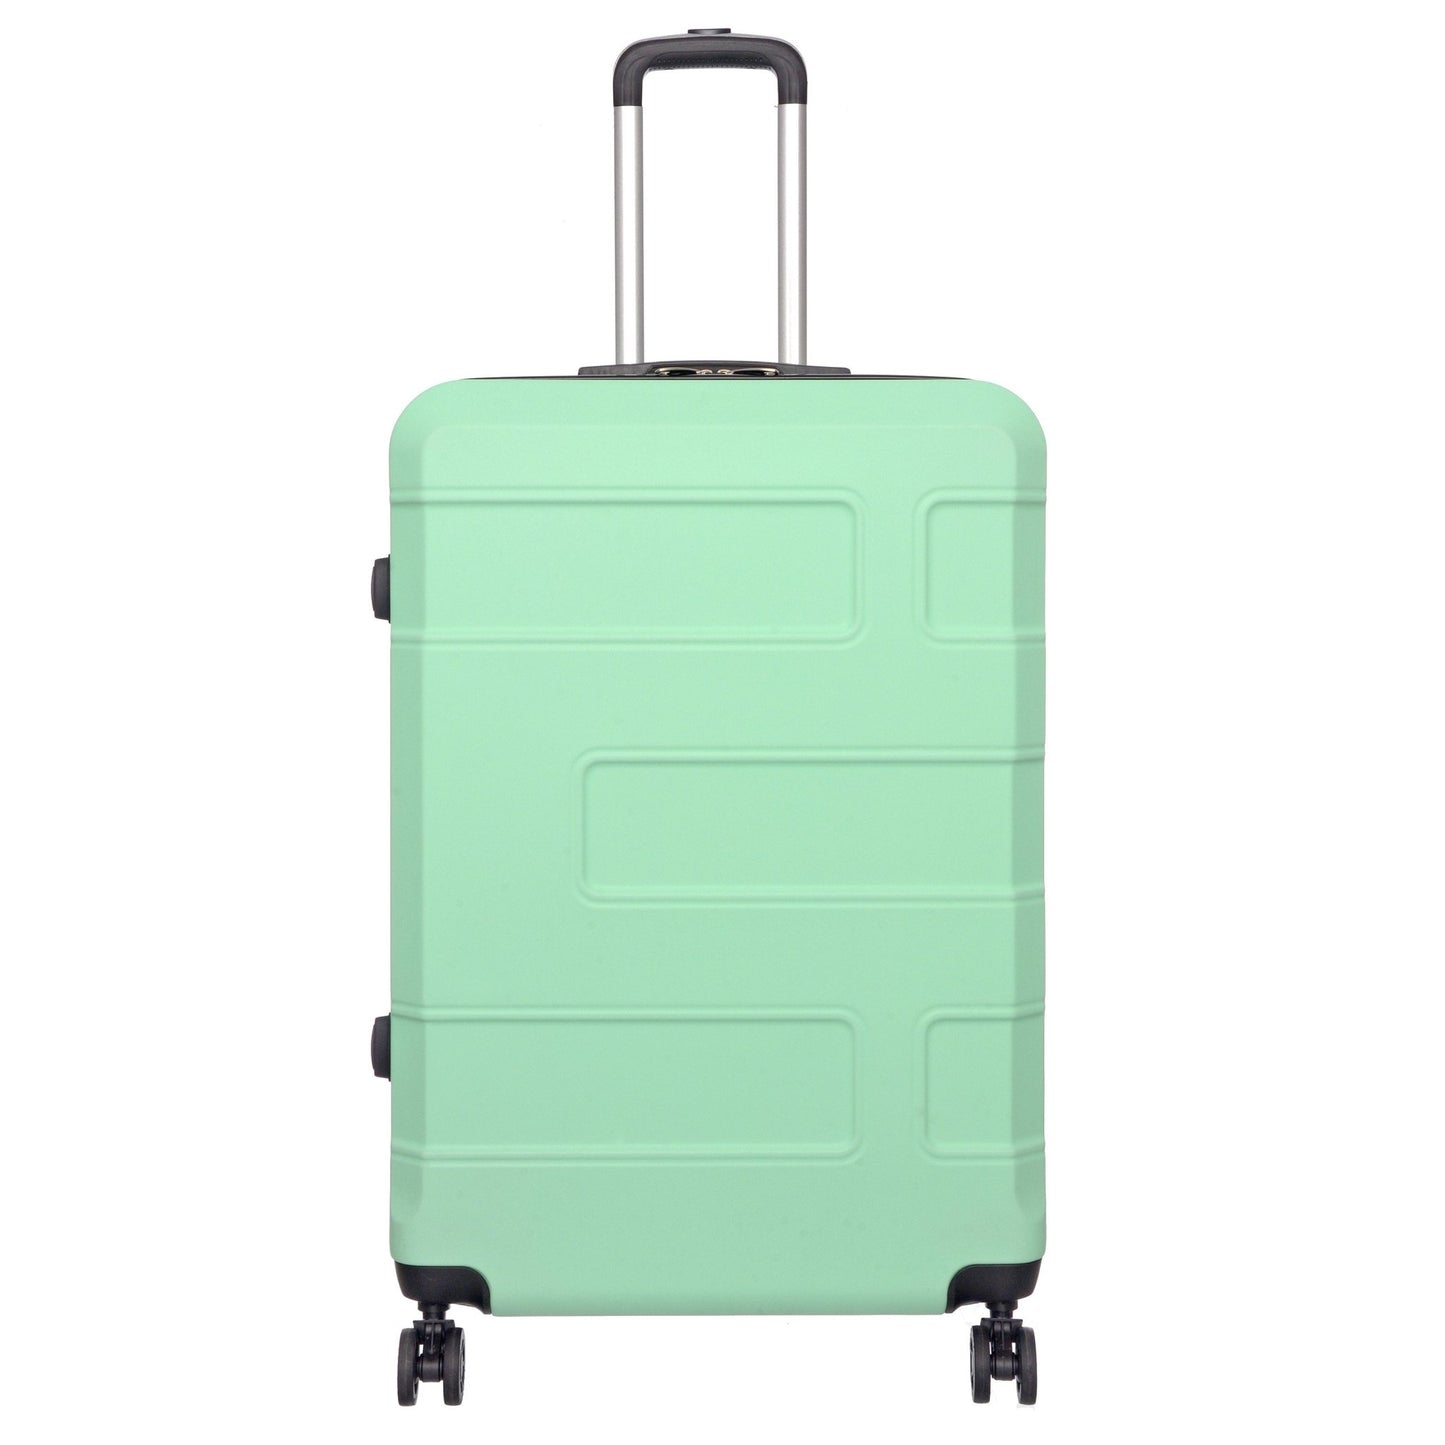 Nicci 3 piece Luggage Set - Kind Designs